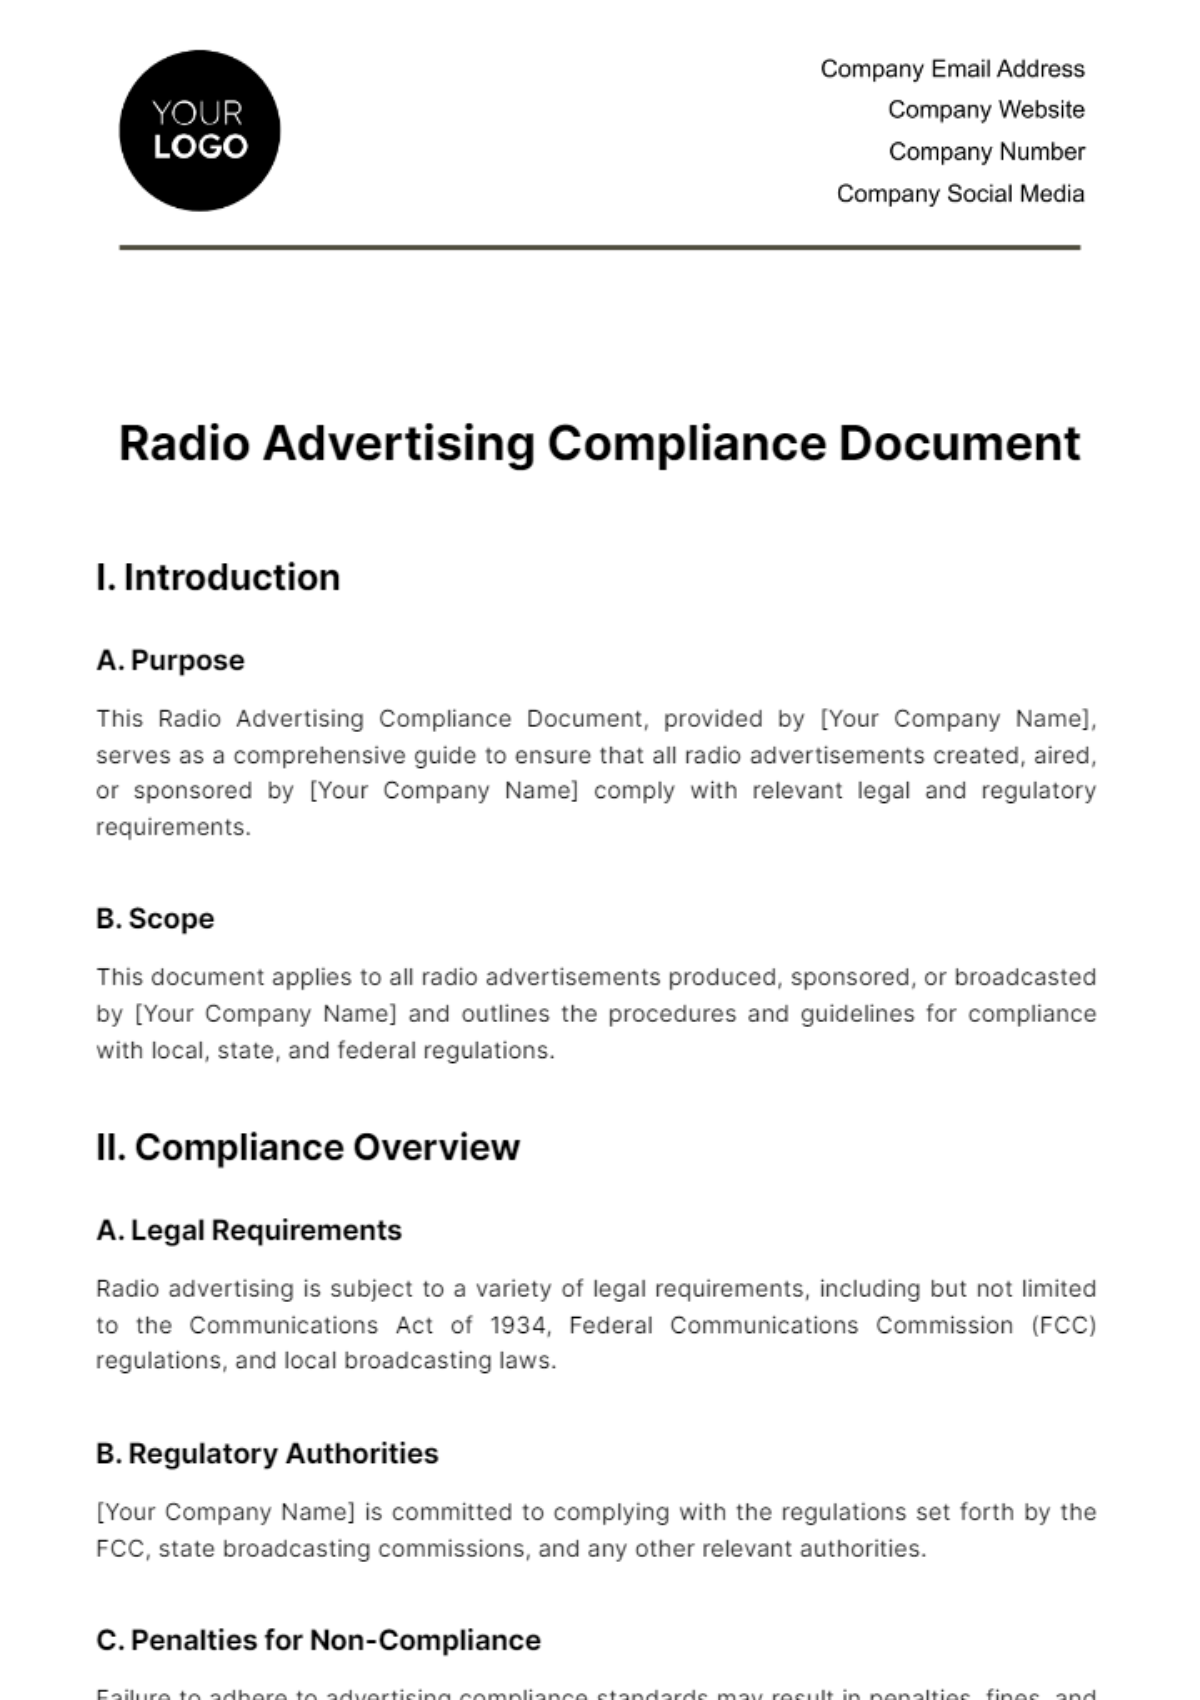 Free Radio Advertising Compliance Document Template